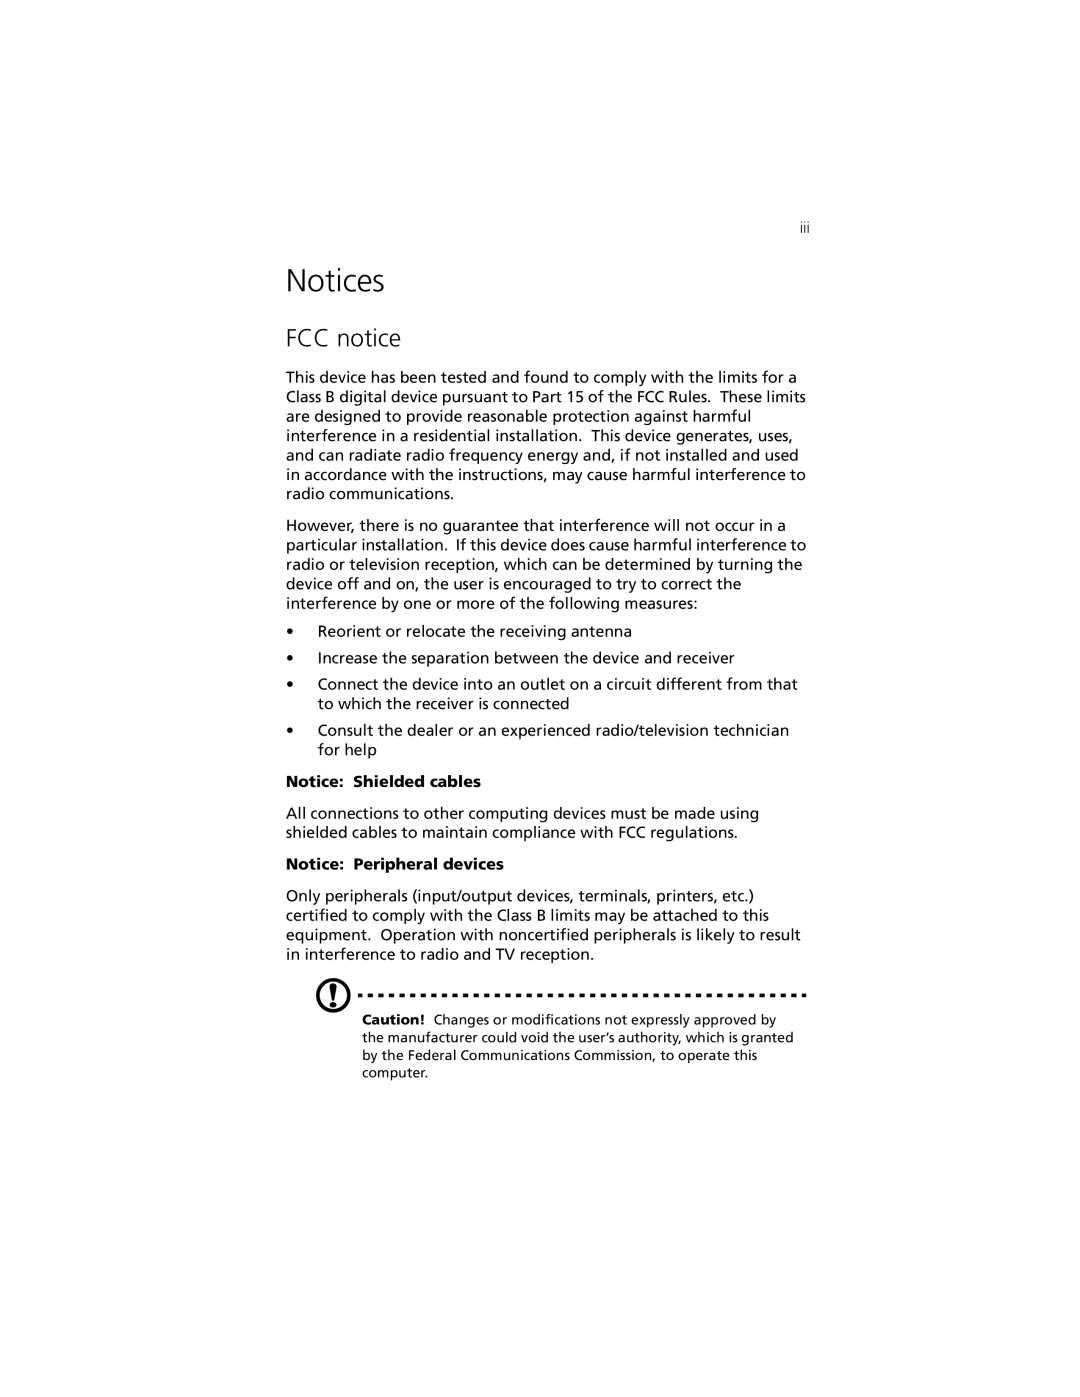 Acer Aspire 3300S manual Notices, FCC notice, Notice Shielded cables, Notice Peripheral devices 